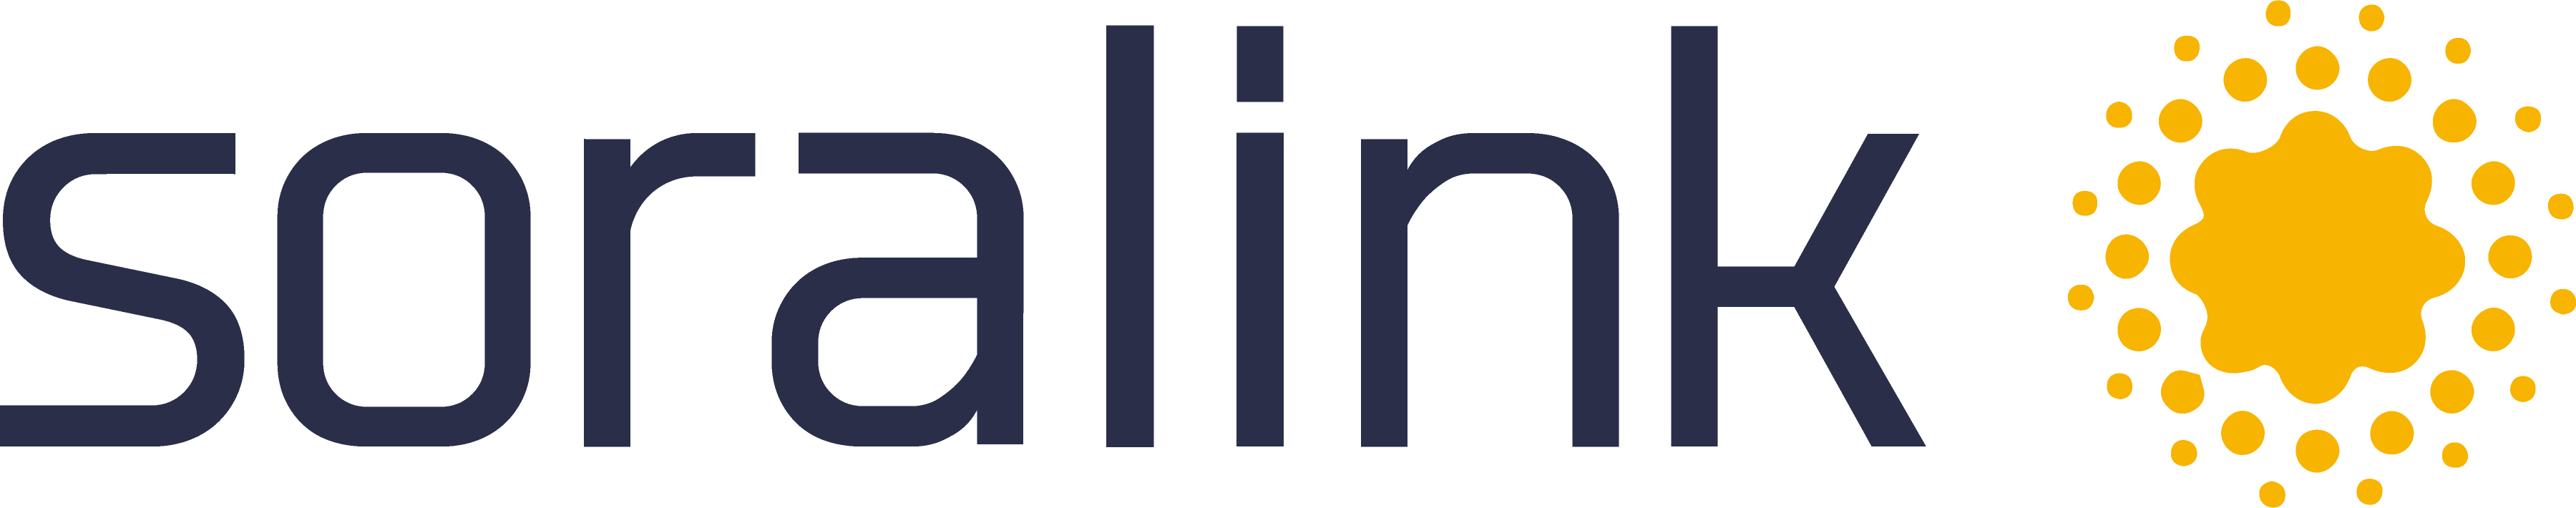 soralink-logo-logo-full-color-rgb